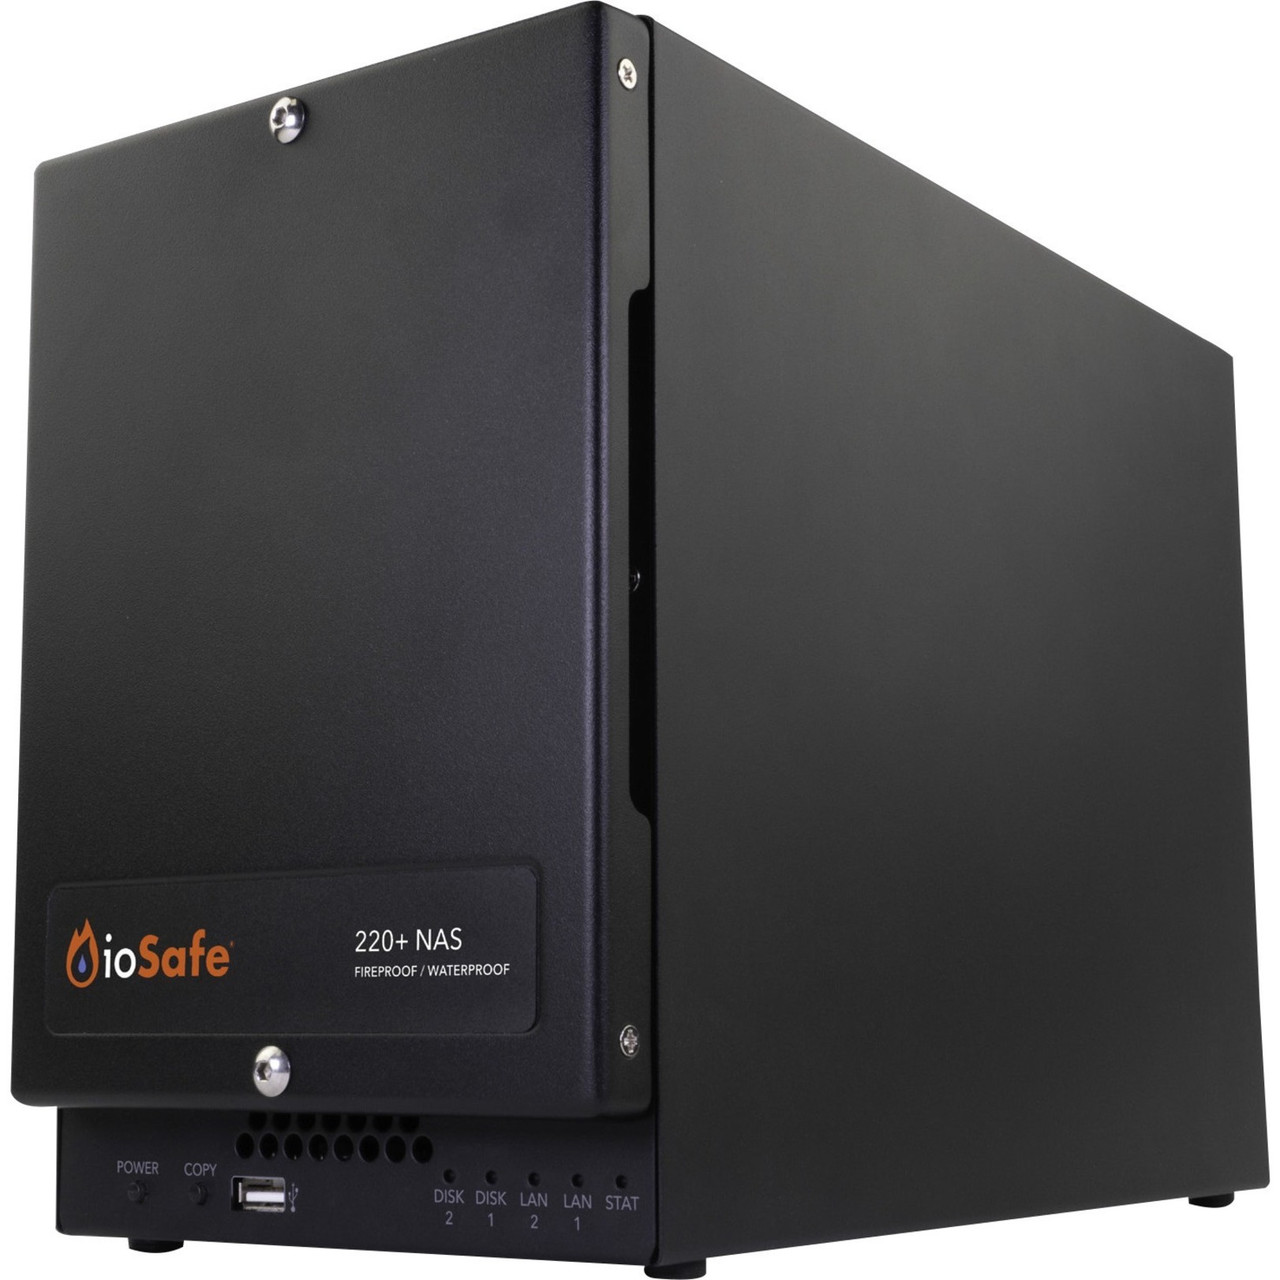 ioSafe 220+ SAN/NAS Storage System - 72200-3838-1500